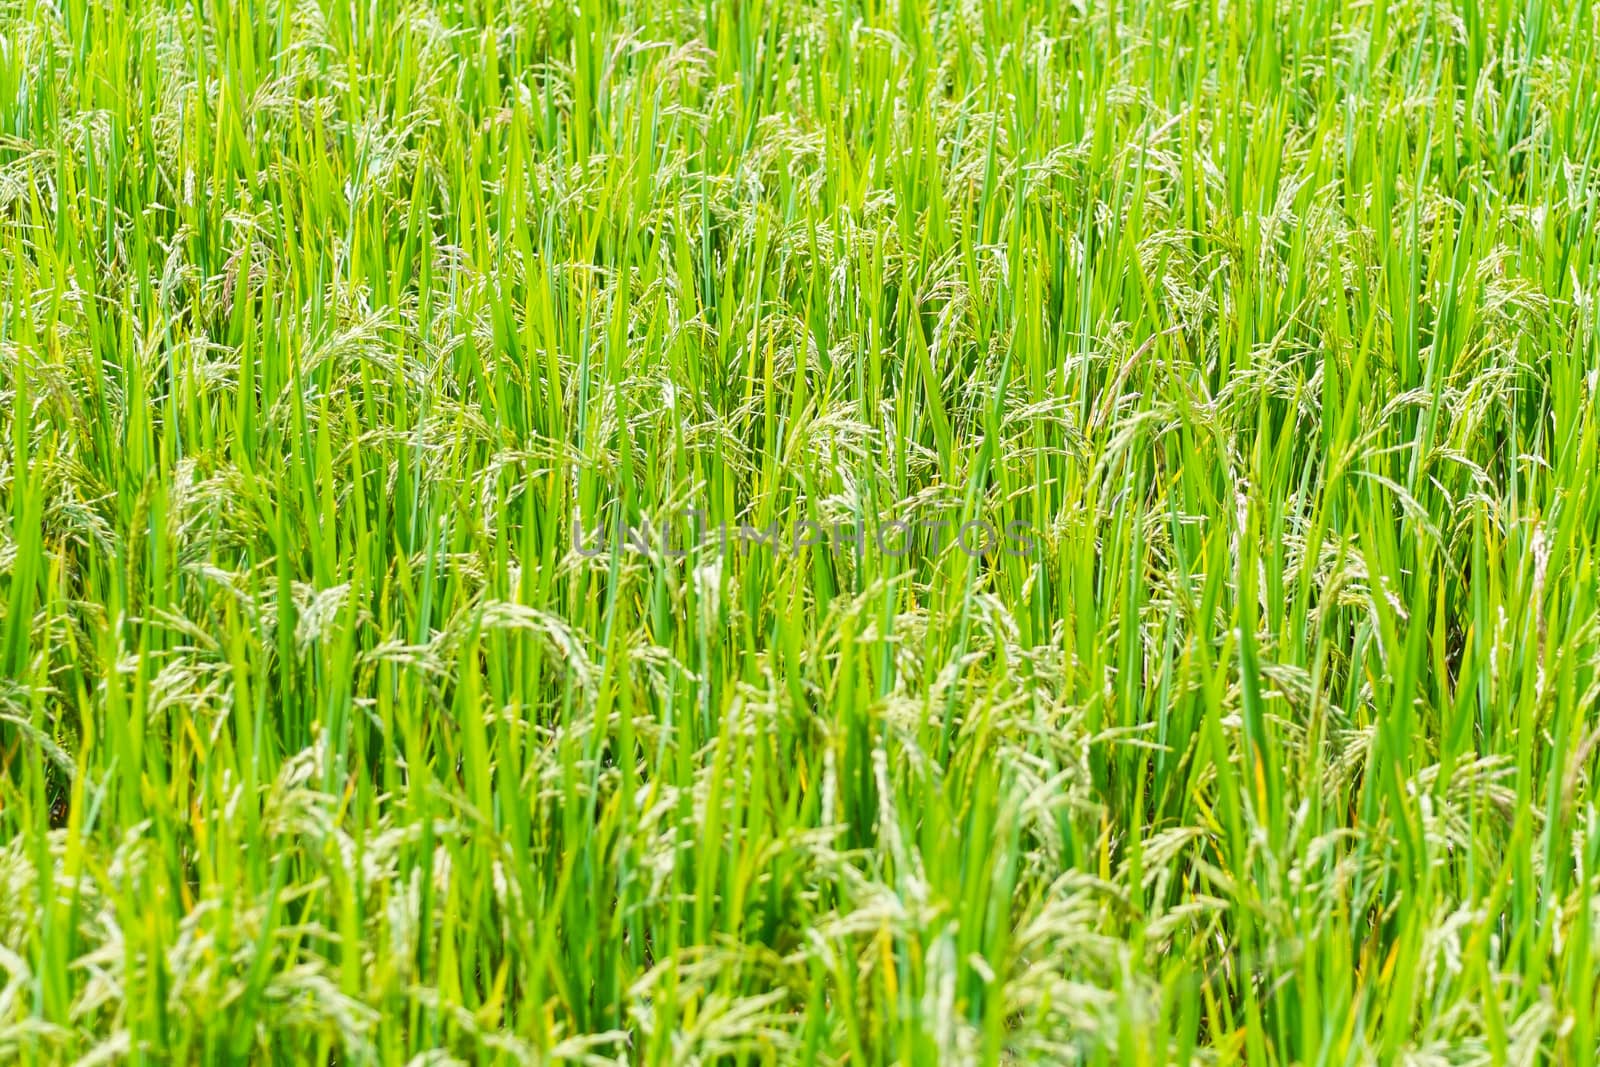 rice fields in thailand by moggara12